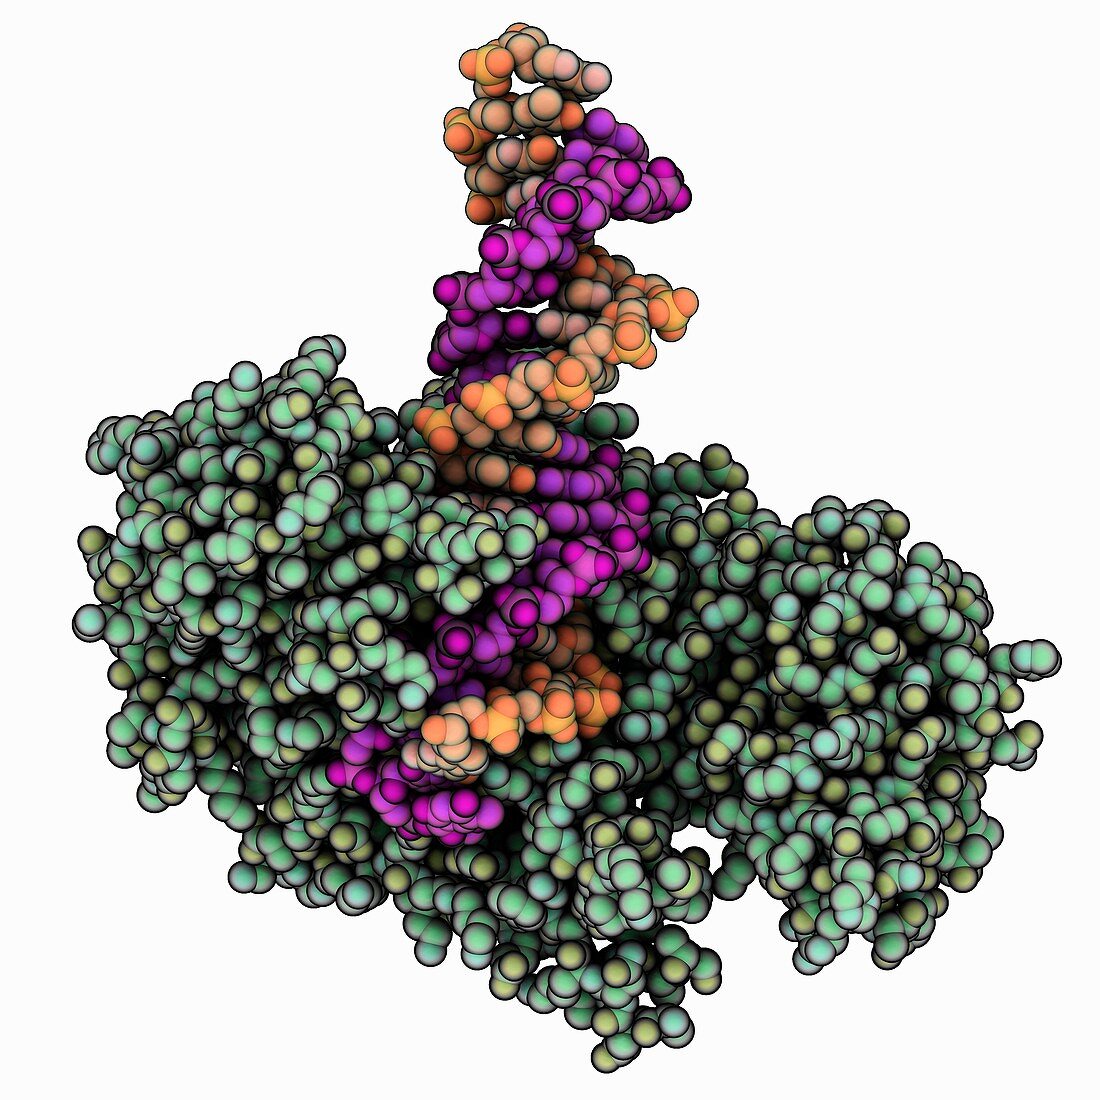 FokI nuclease bound to DNA